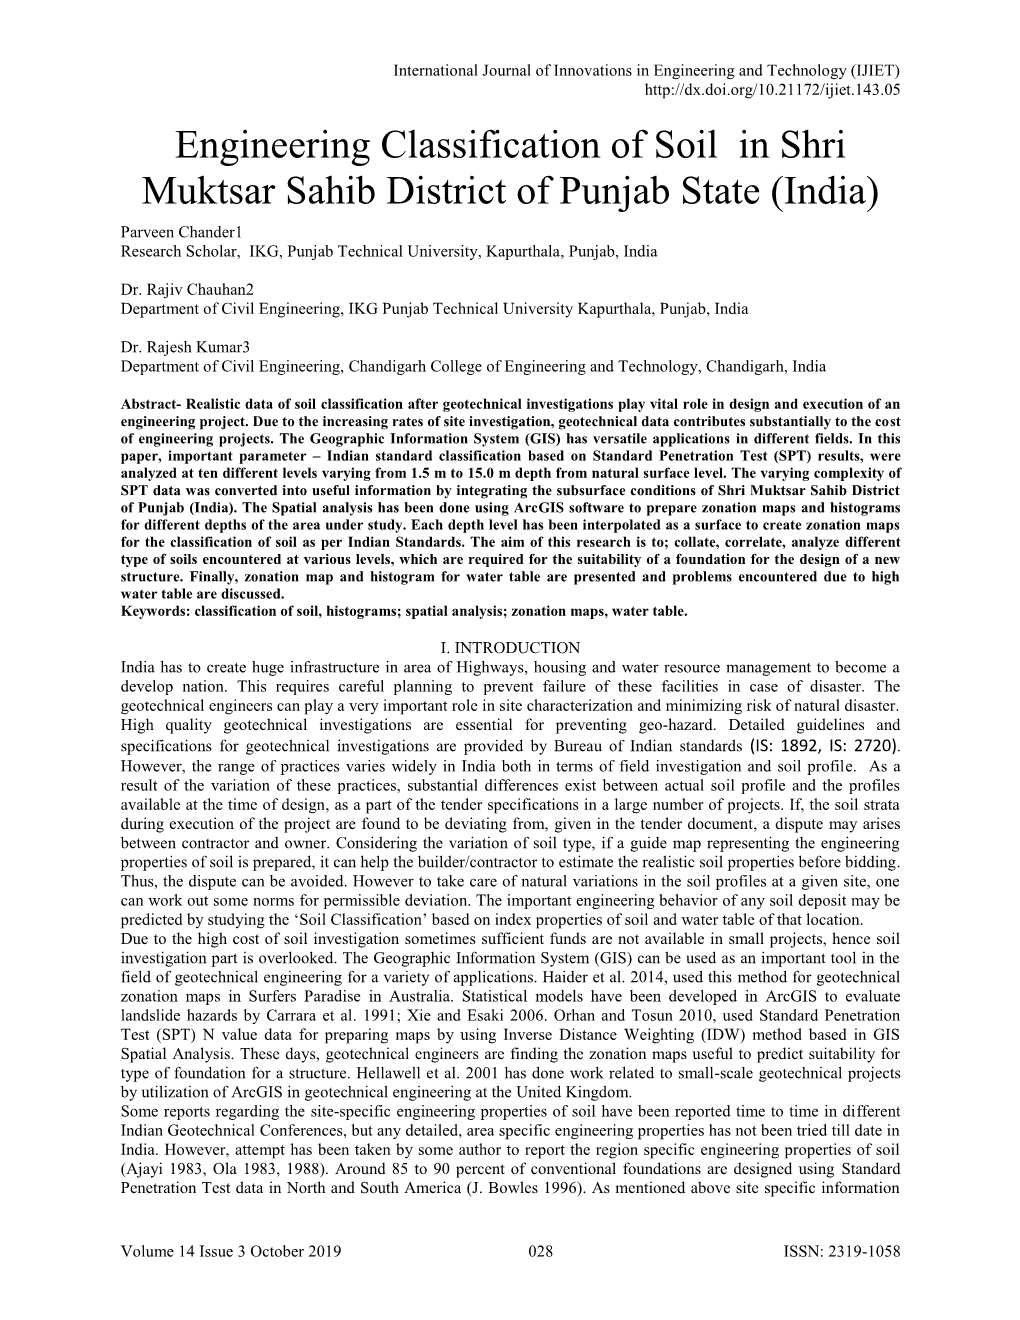 Engineering Classification of Soil in Shri Muktsar Sahib District of Punjab State (India)